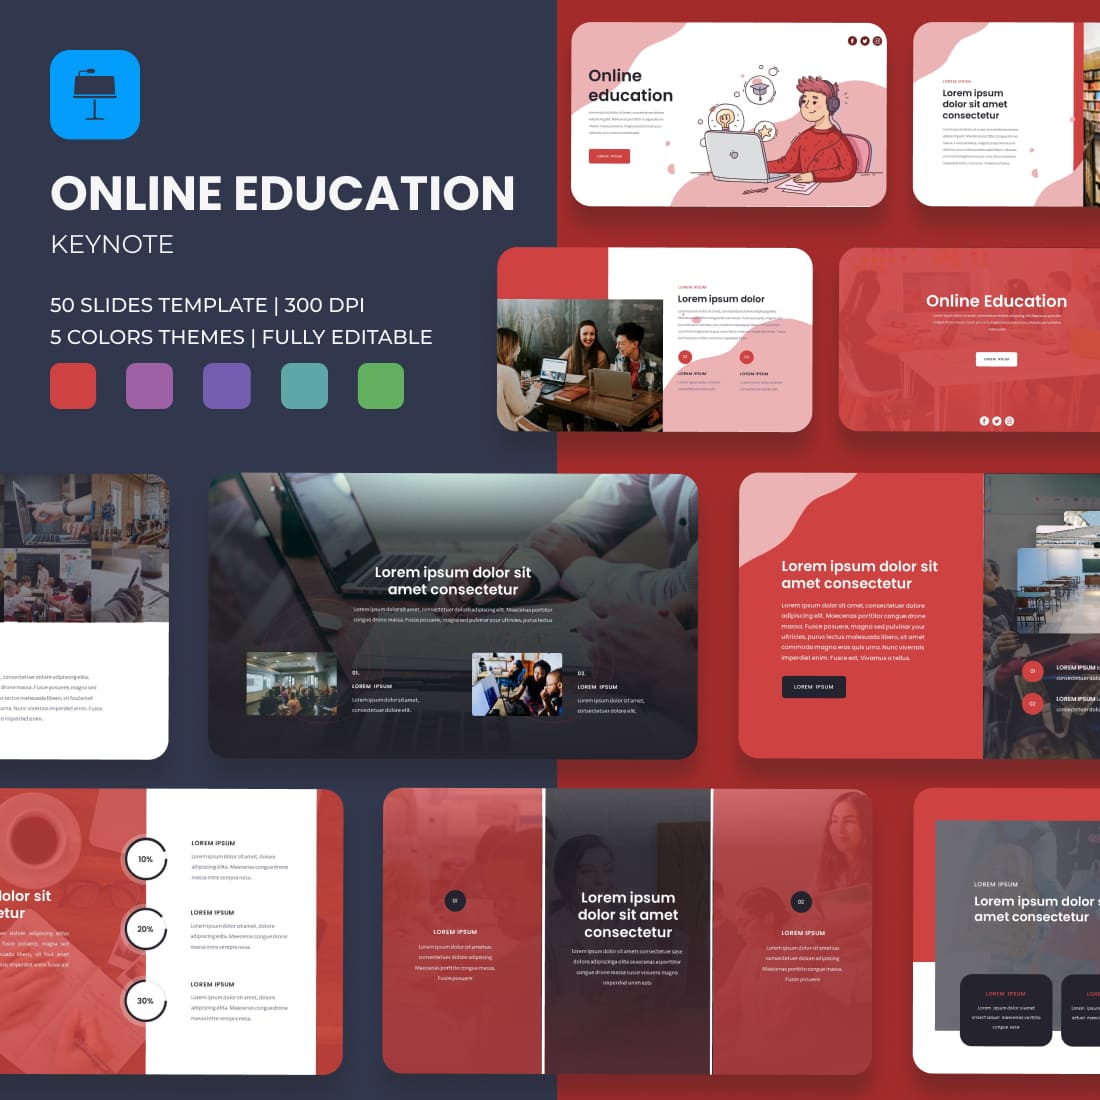 Online Education Keynote Template: 50 Slides.